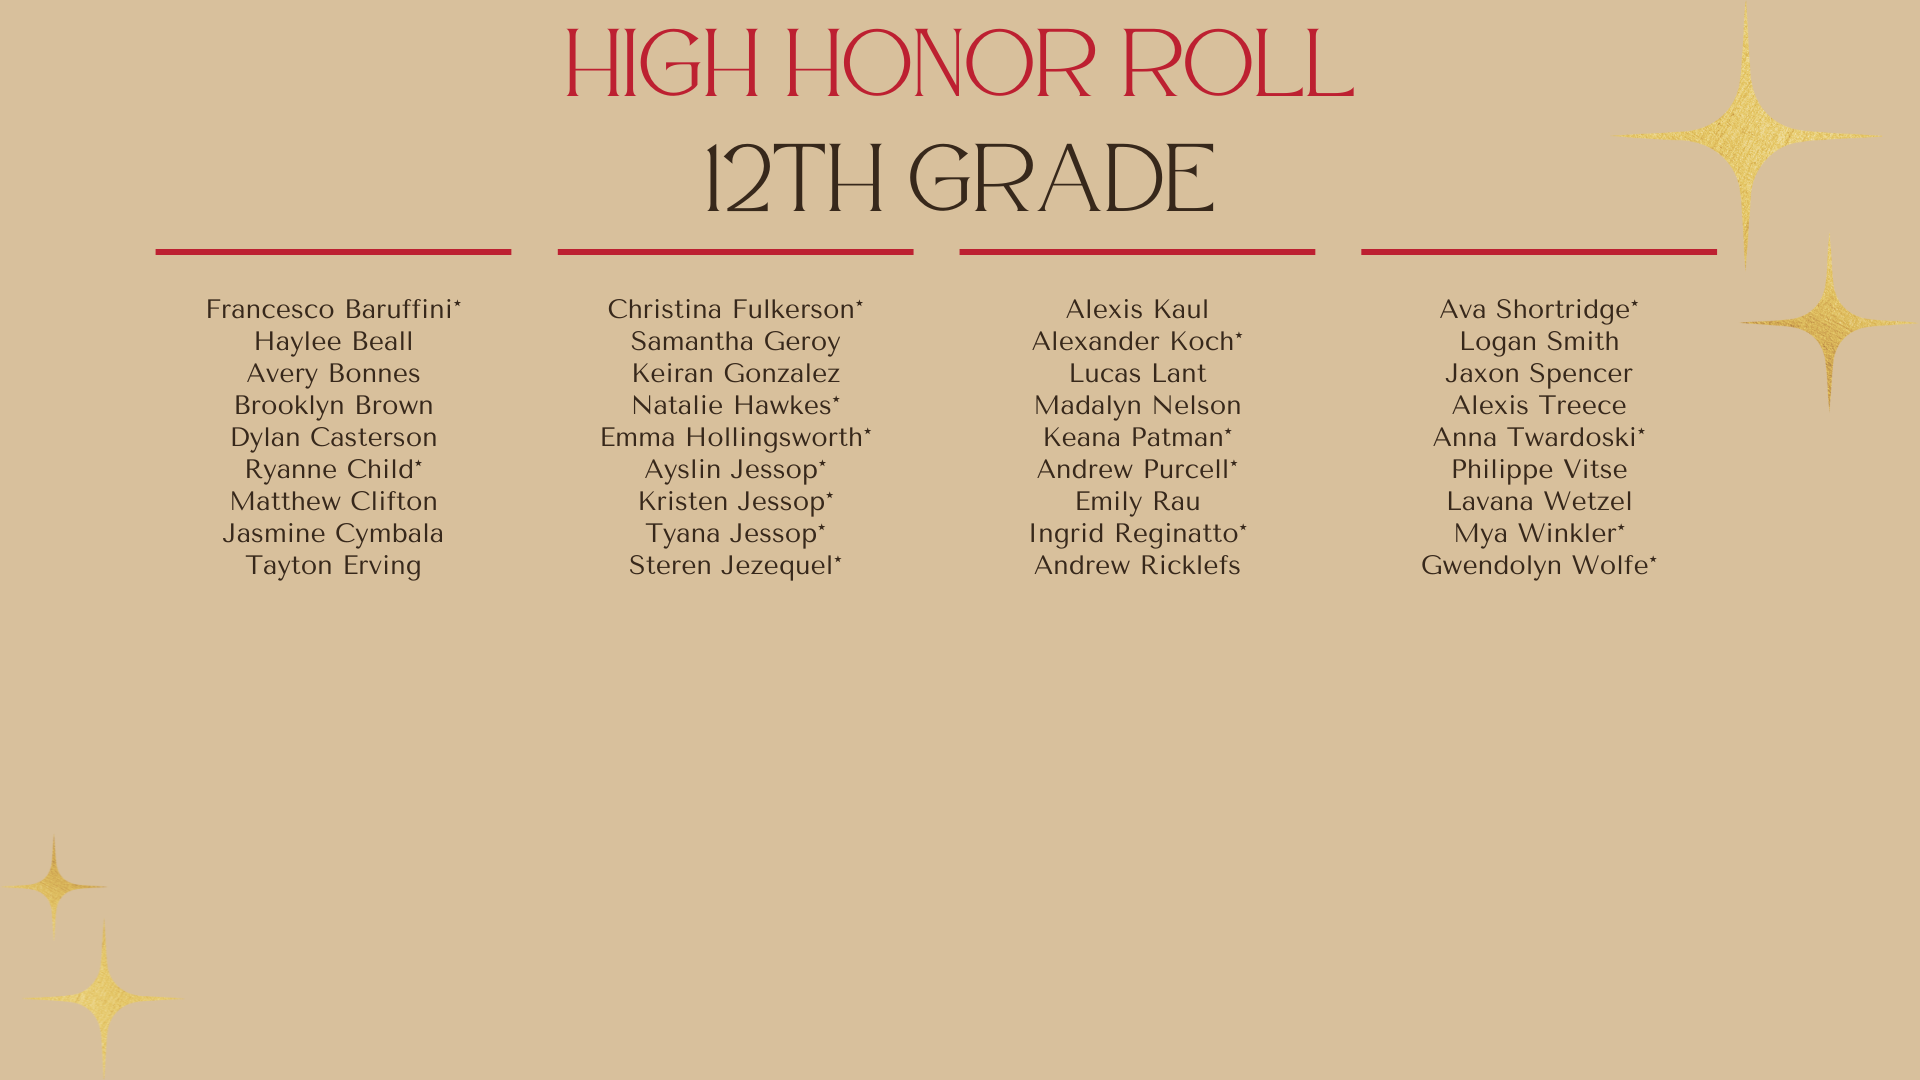 High Honor Roll 12th Grade